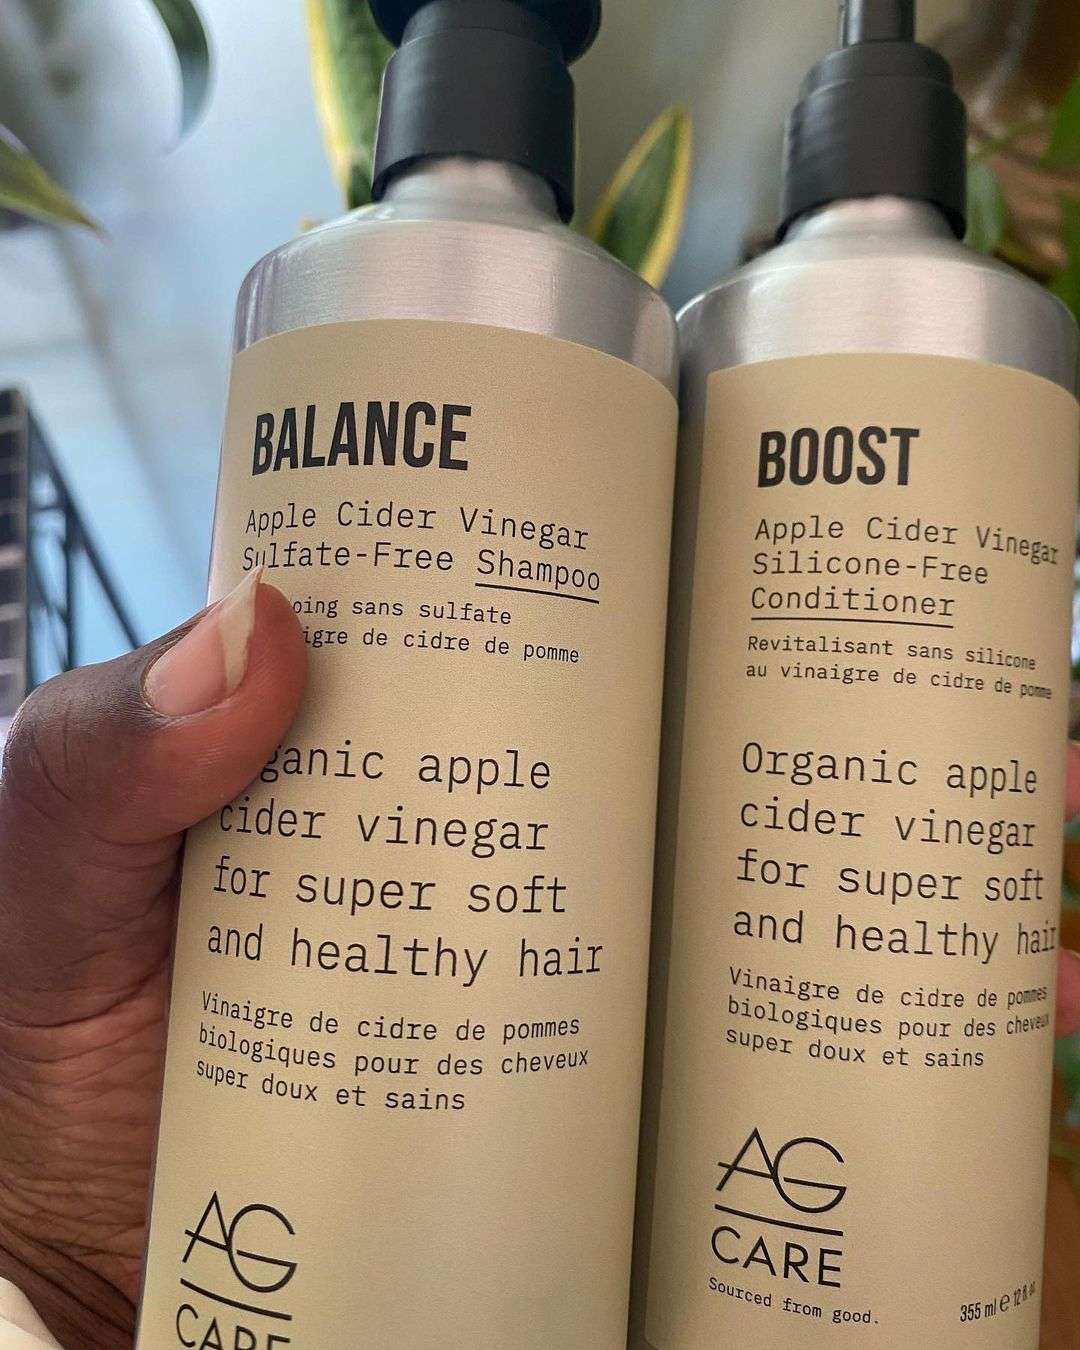 AG Care Balance Apple Cider Vinegar Sulfate-Free Shampoo